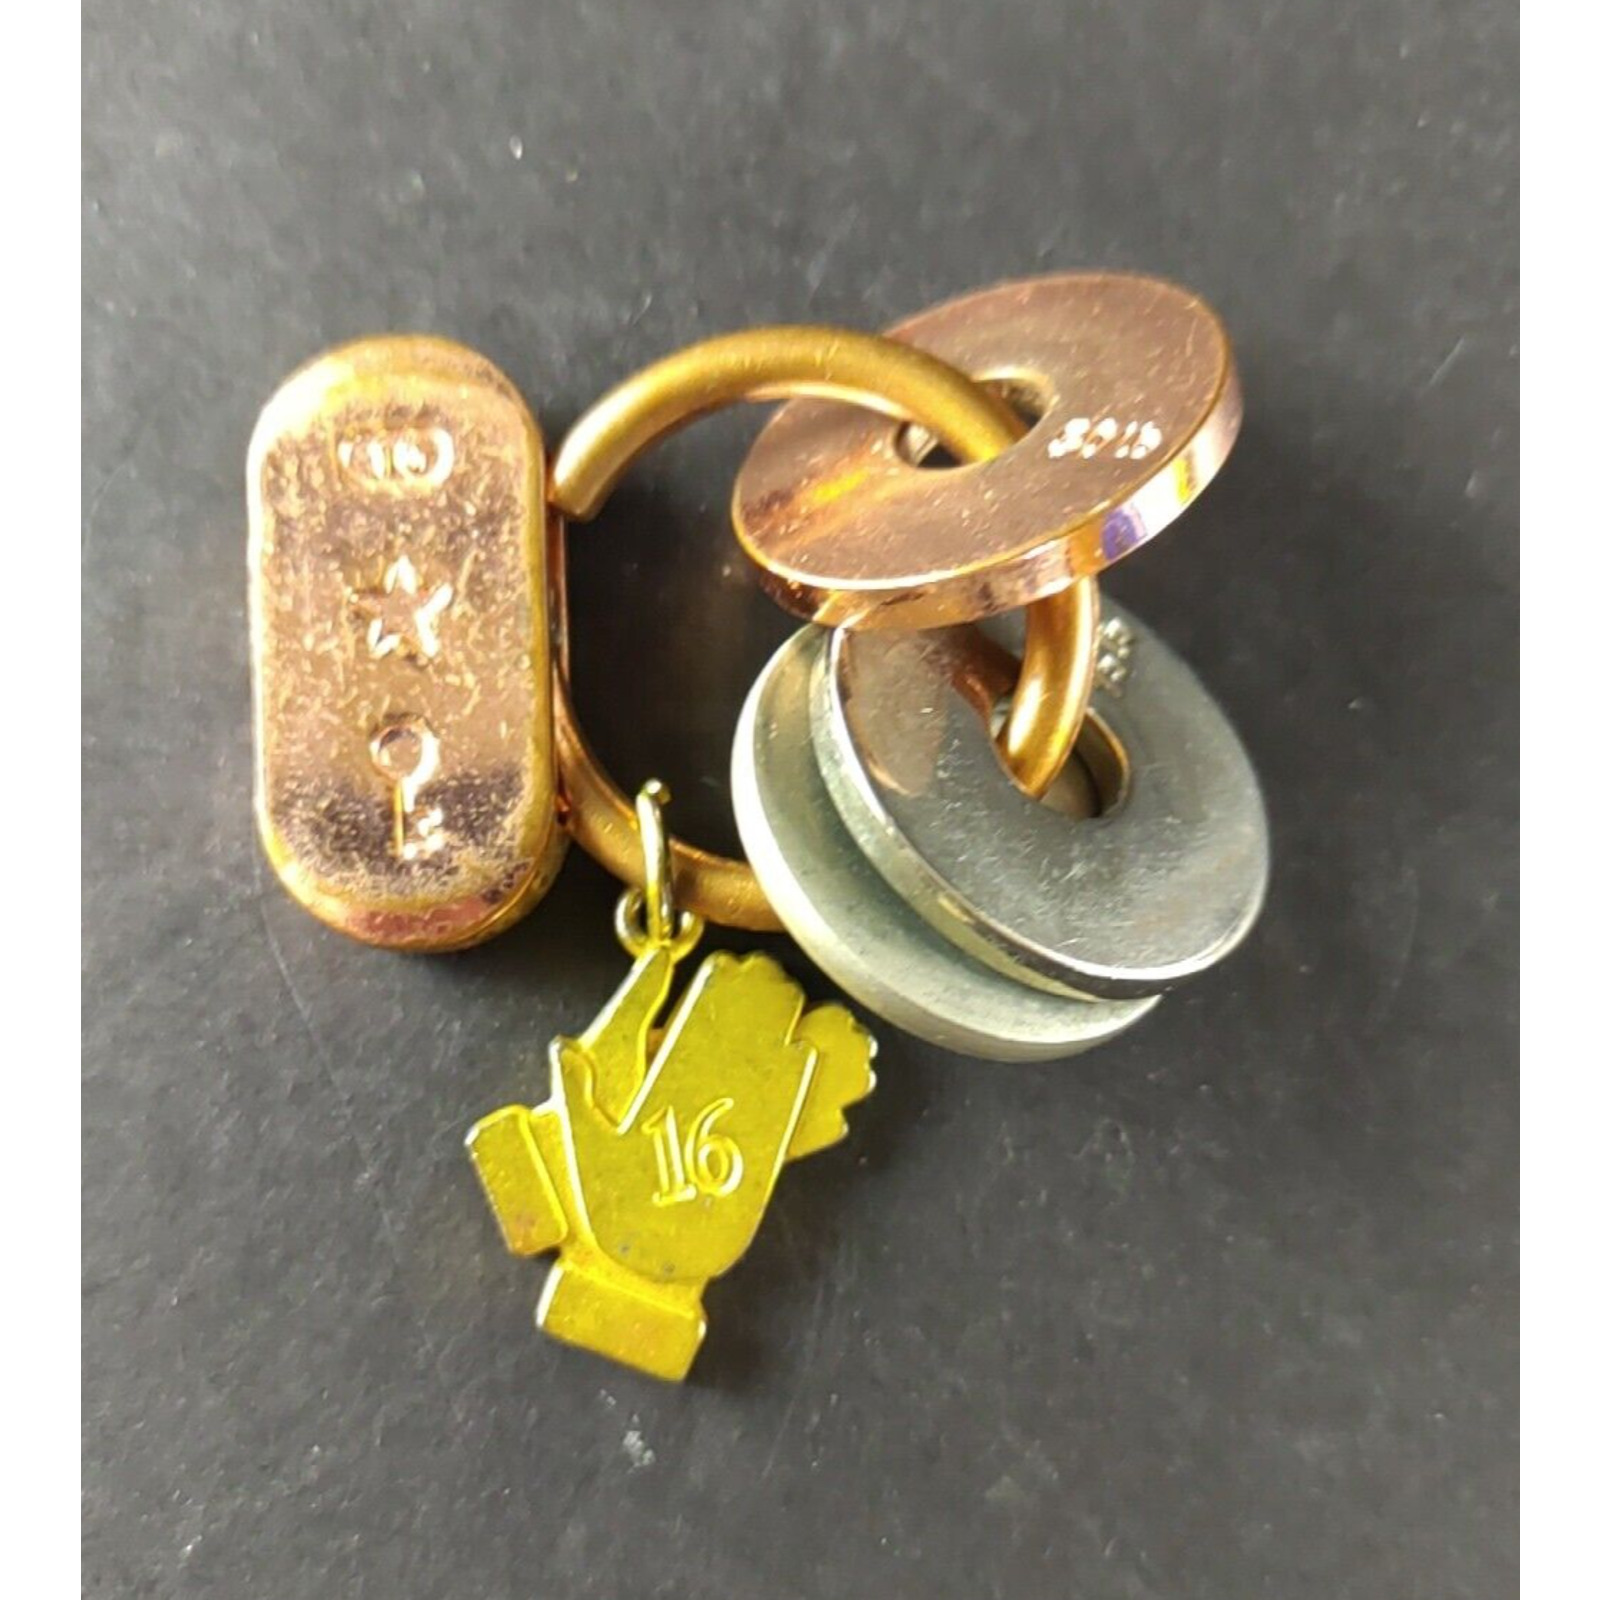 16 Hands Copper Silver Nickel Metal ? Keychain